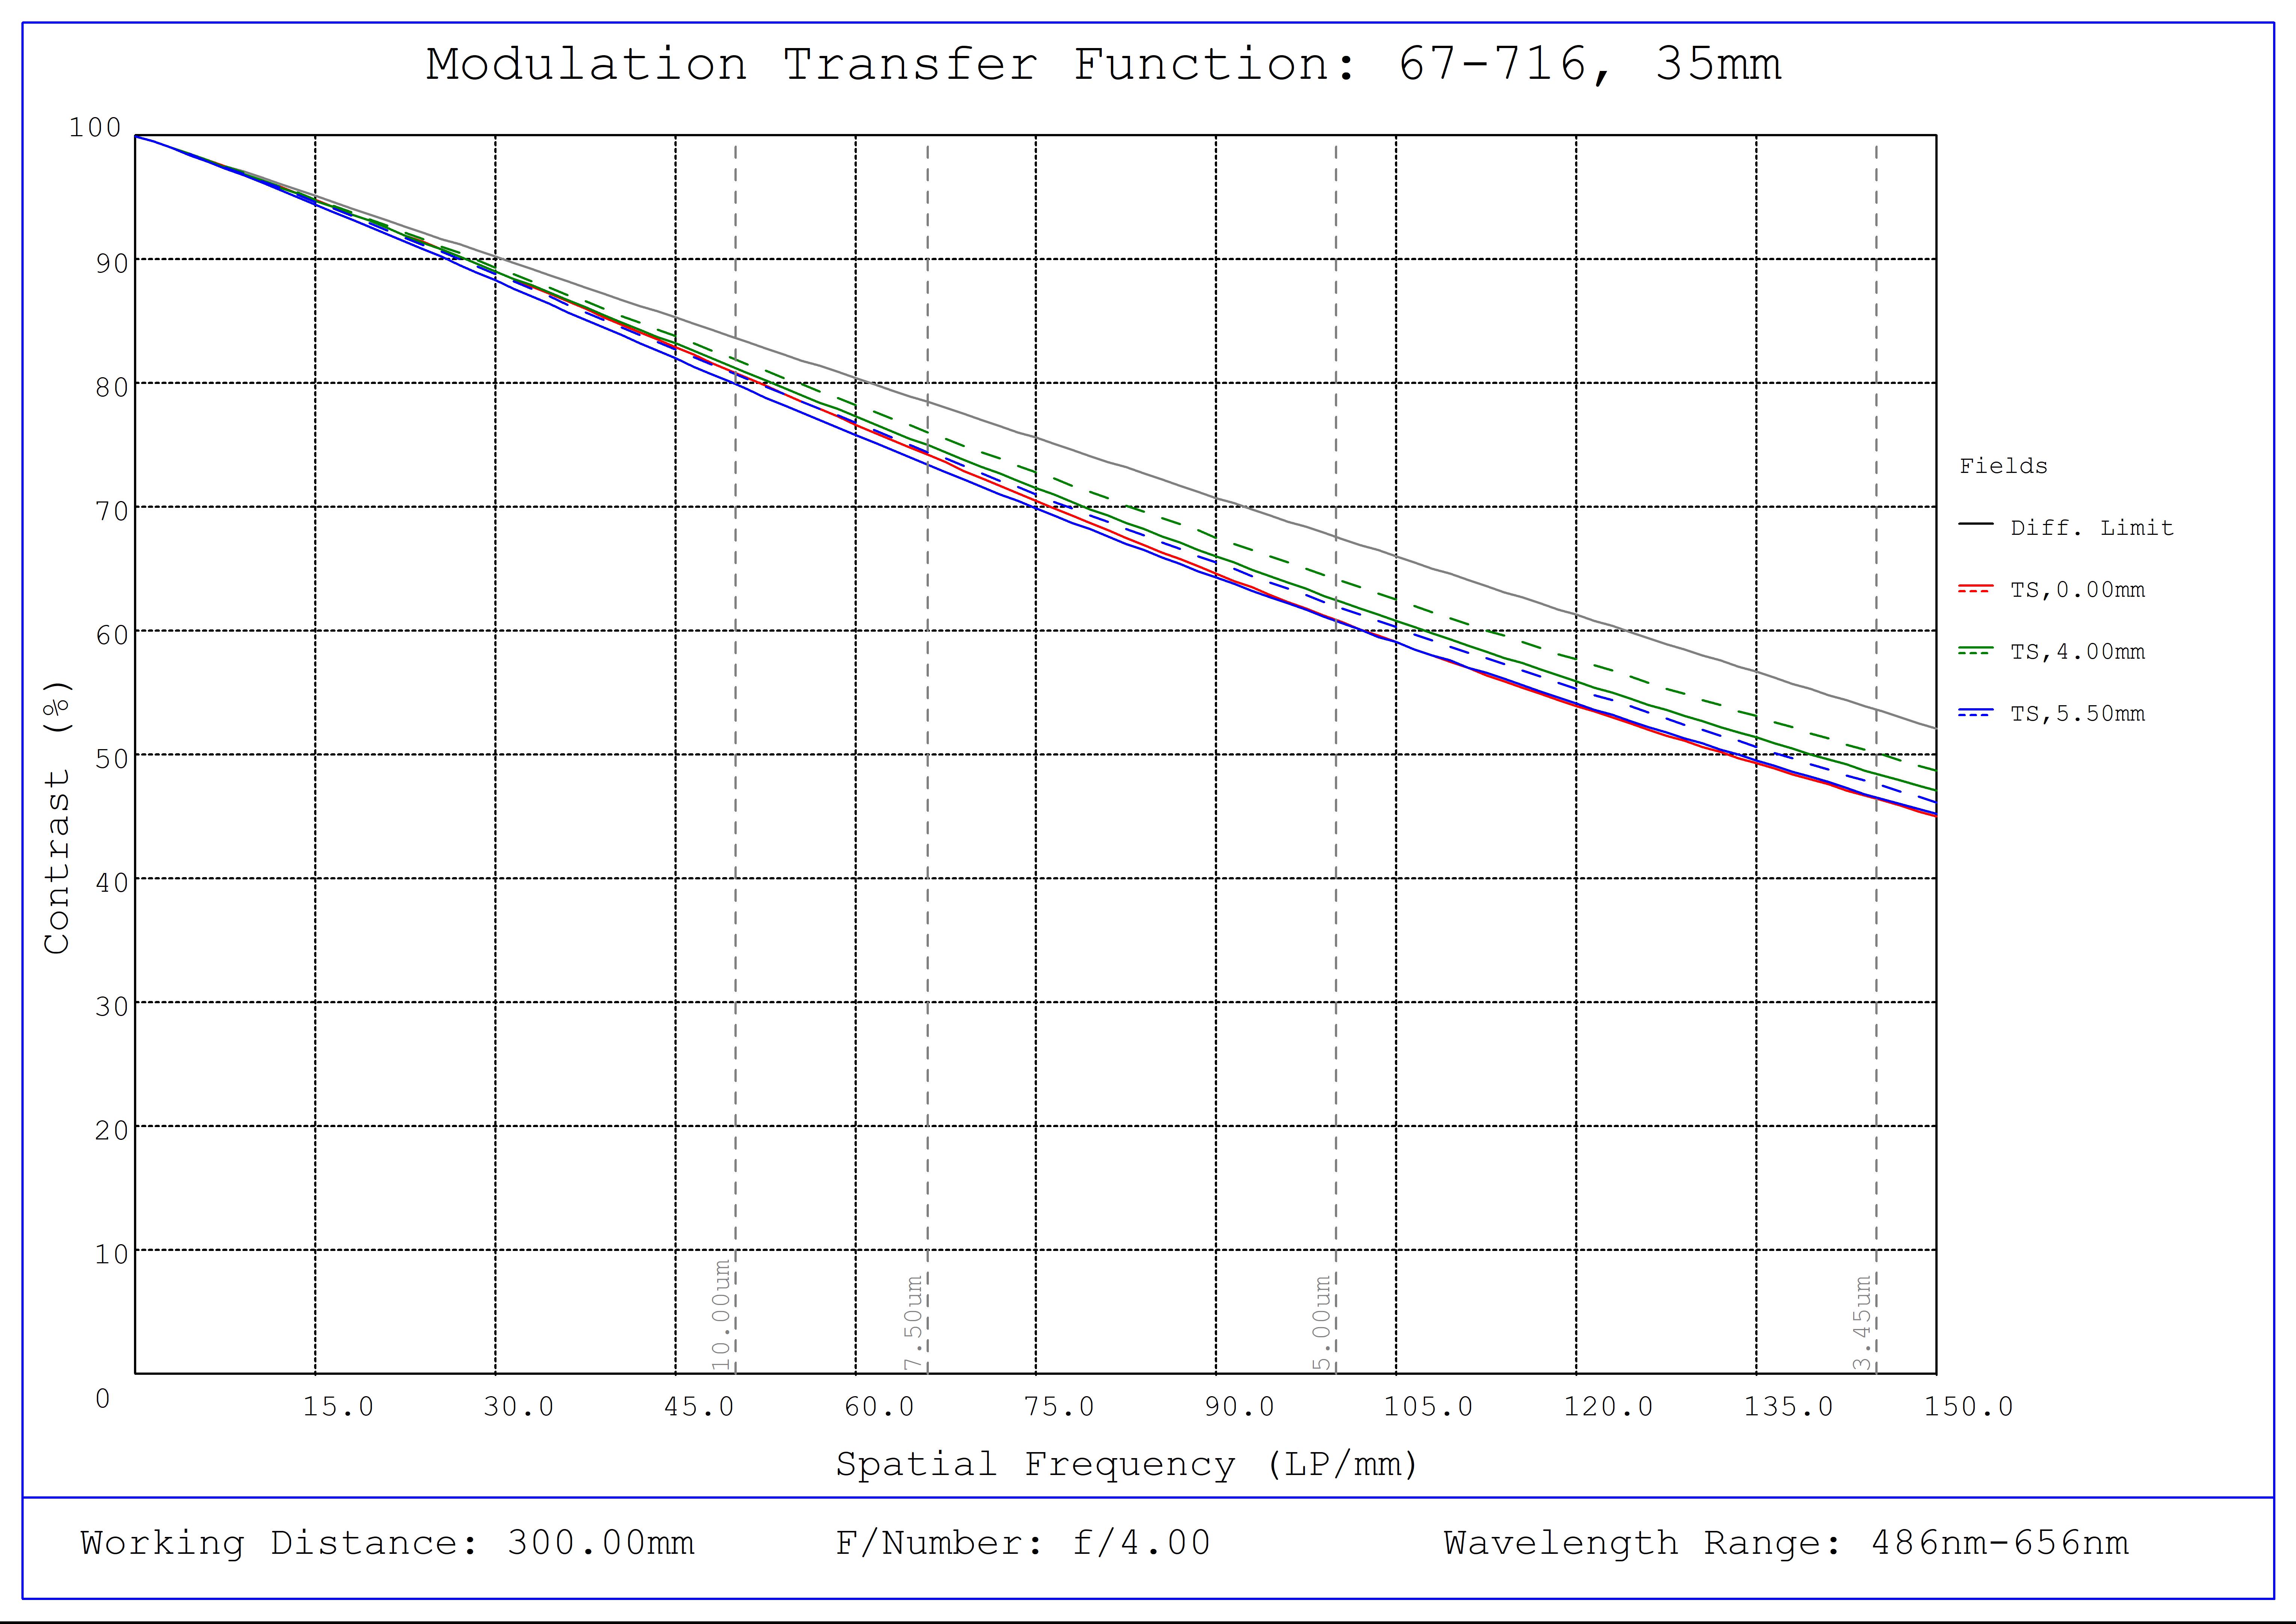 #67-716, 35mm C VIS-NIR Series Fixed Focal Length Lens, Modulated Transfer Function (MTF) Plot, 300mm Working Distance, f4